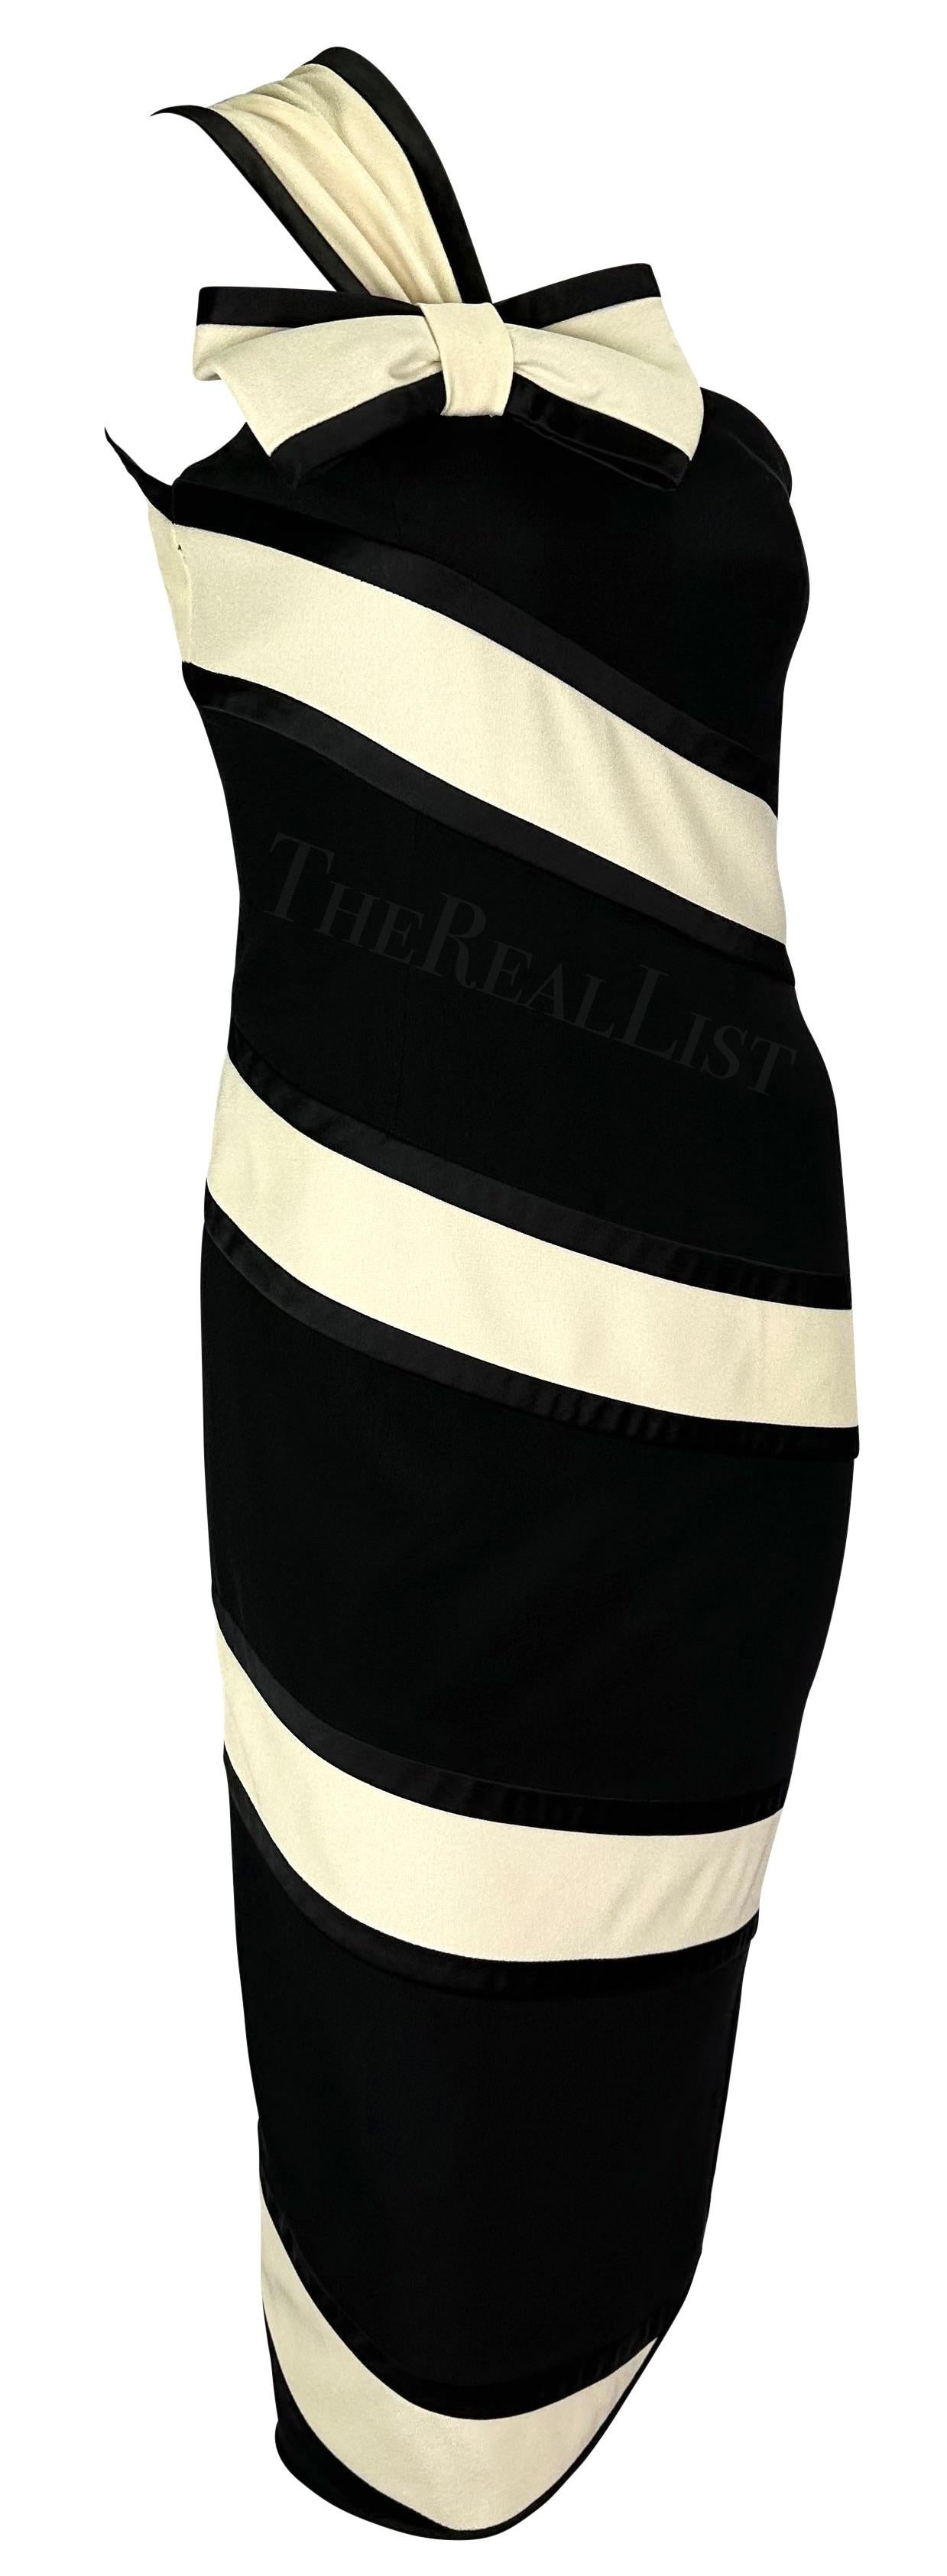 S/S 1993 Valentino Garavani Runway Black White Stripe Bow Dress For Sale 3